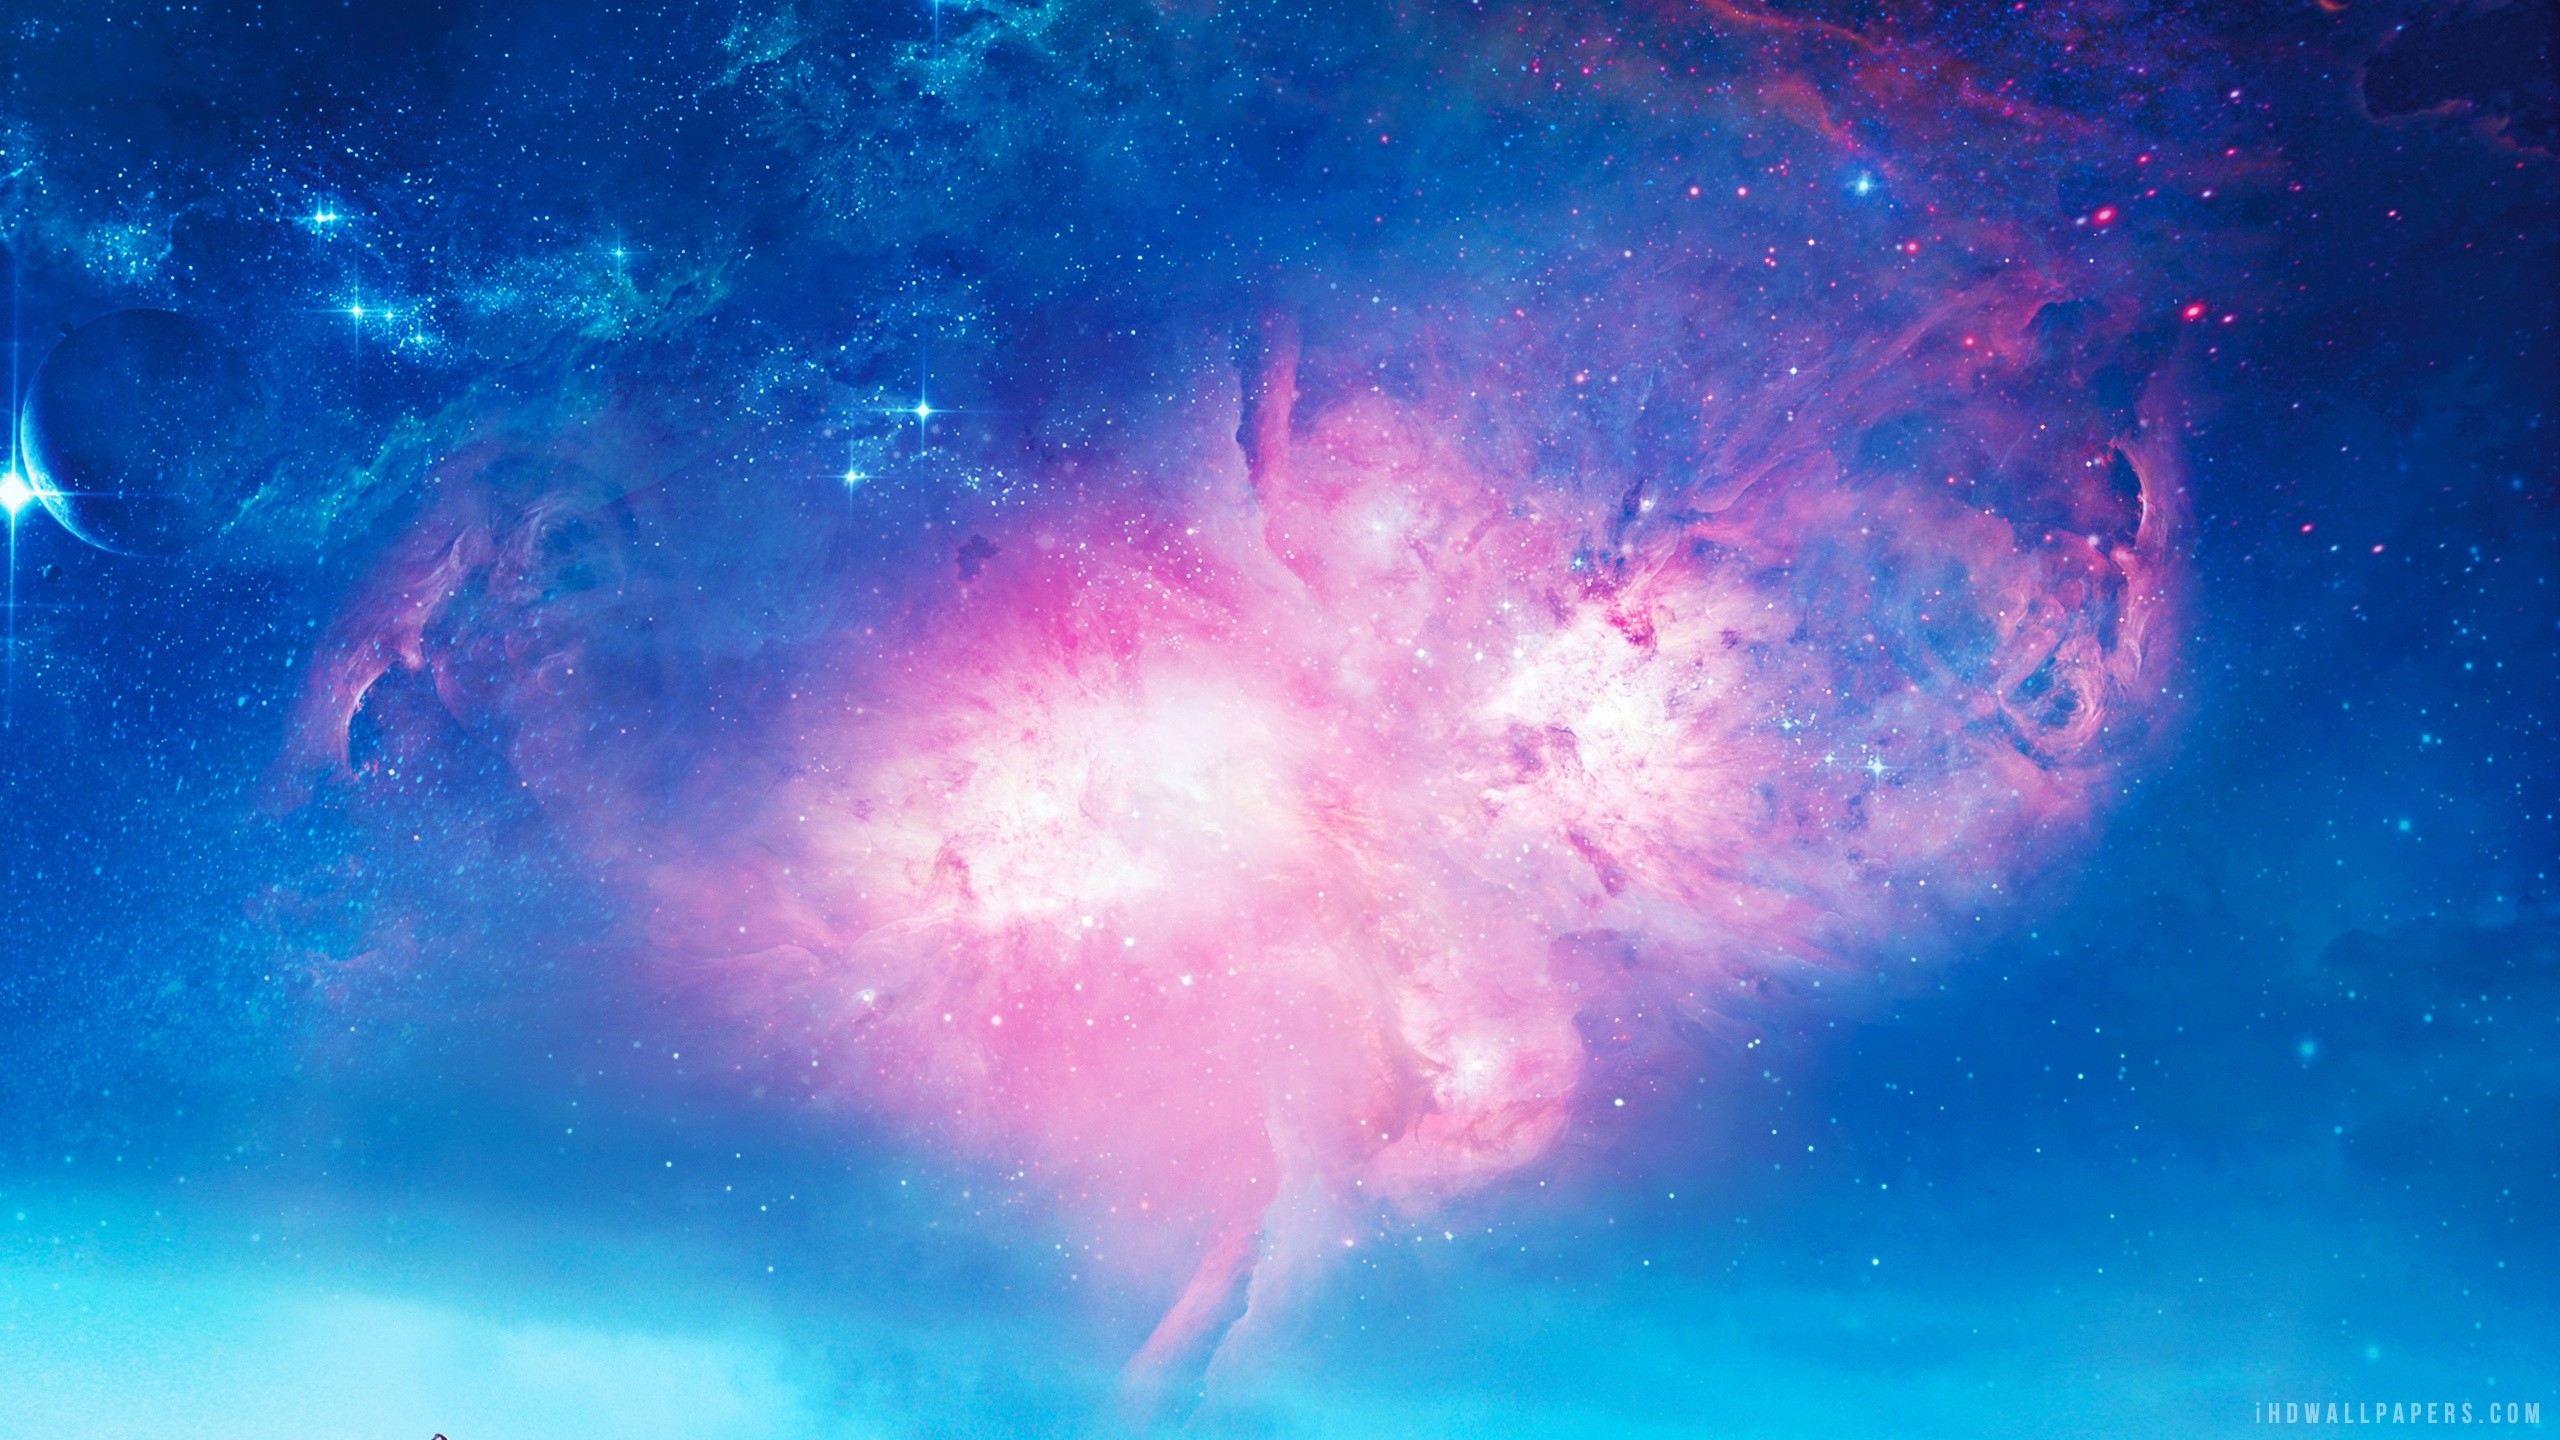 2560x1440  wallpaper space galaxy - photo #47. Galaxy wallpaper - 1323221